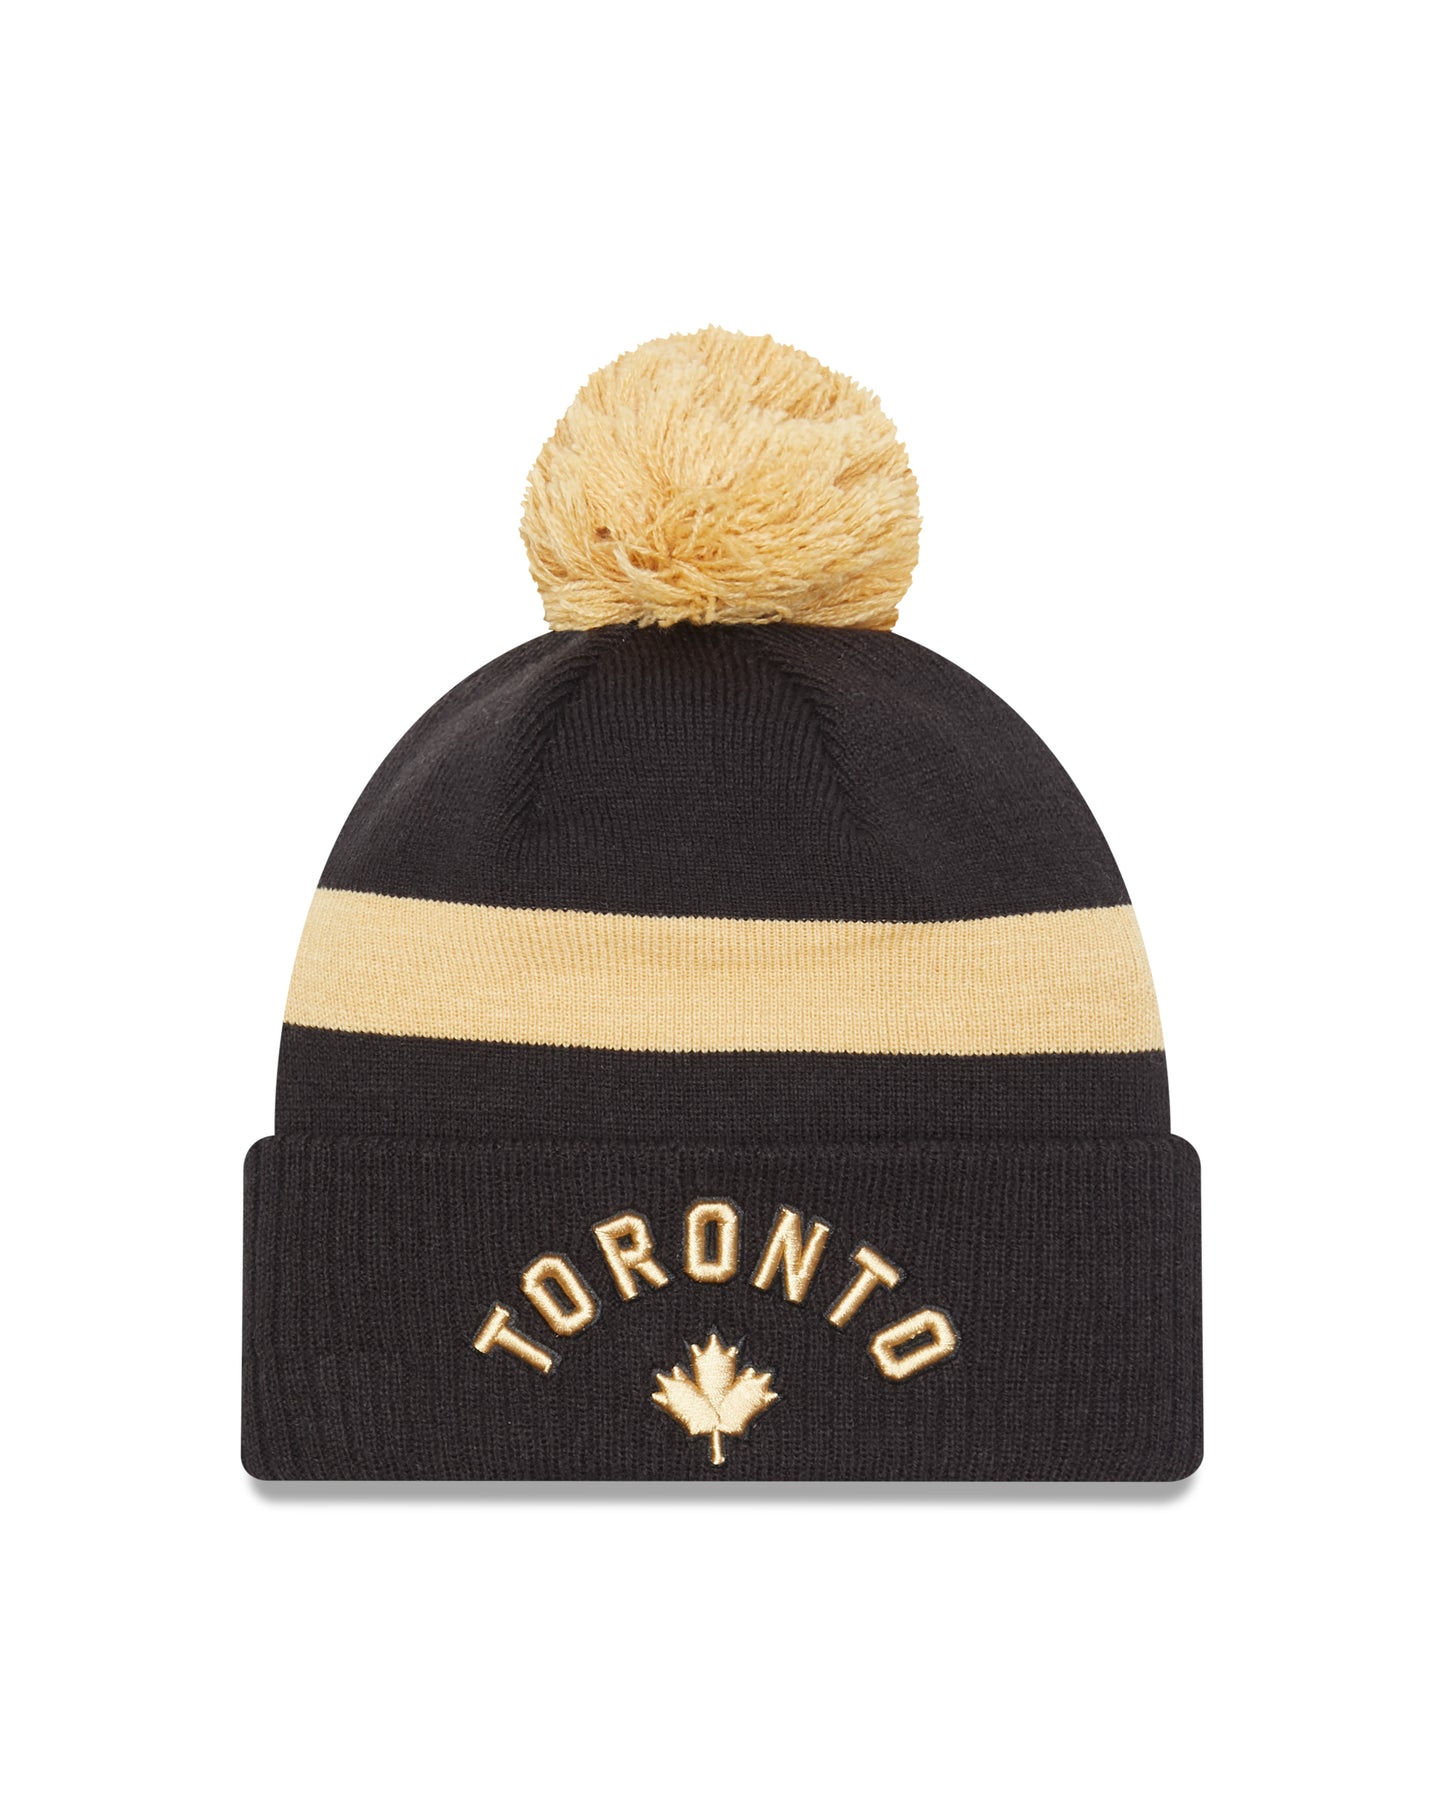 Toronto Raptors New Era City Edition Knit Hat